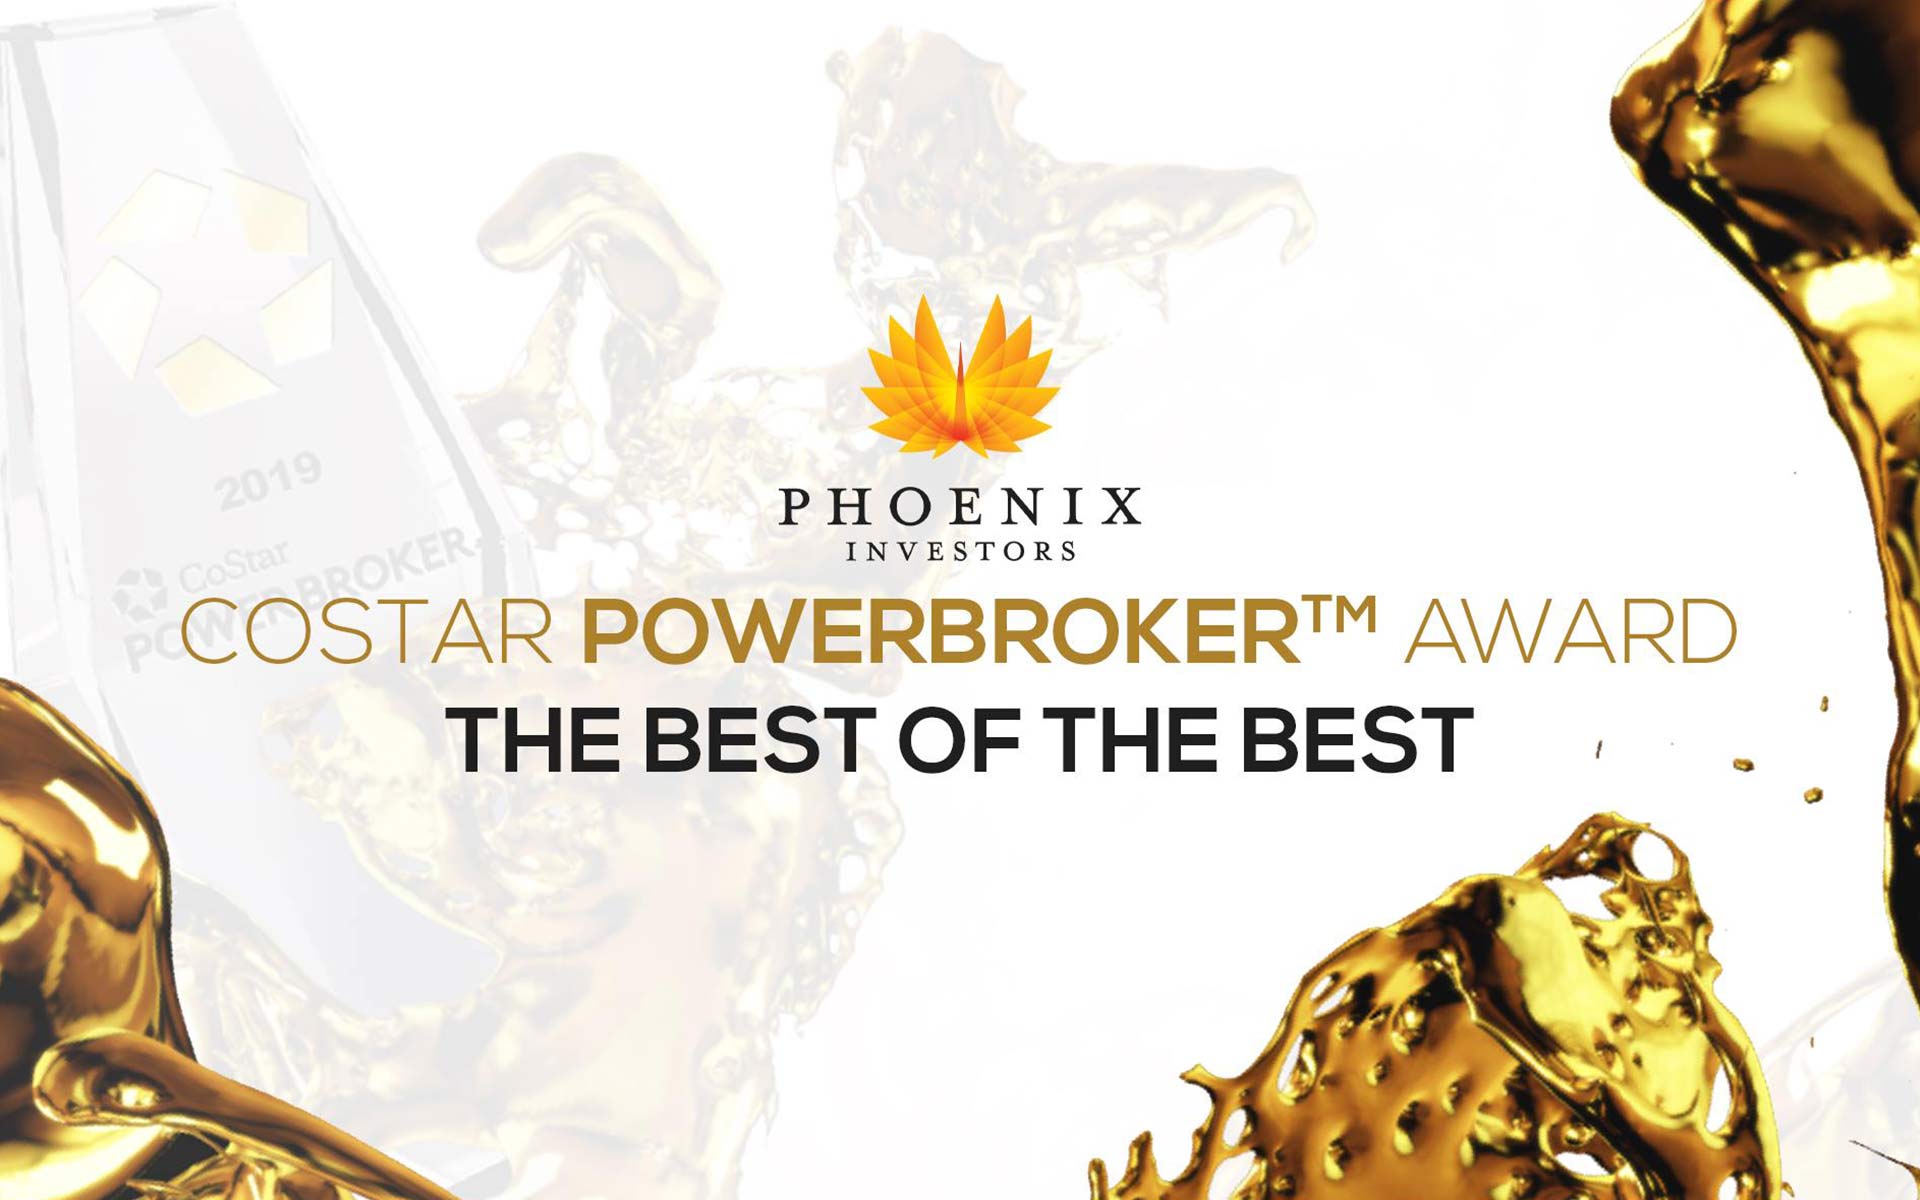 CoStar Powerbroker Award